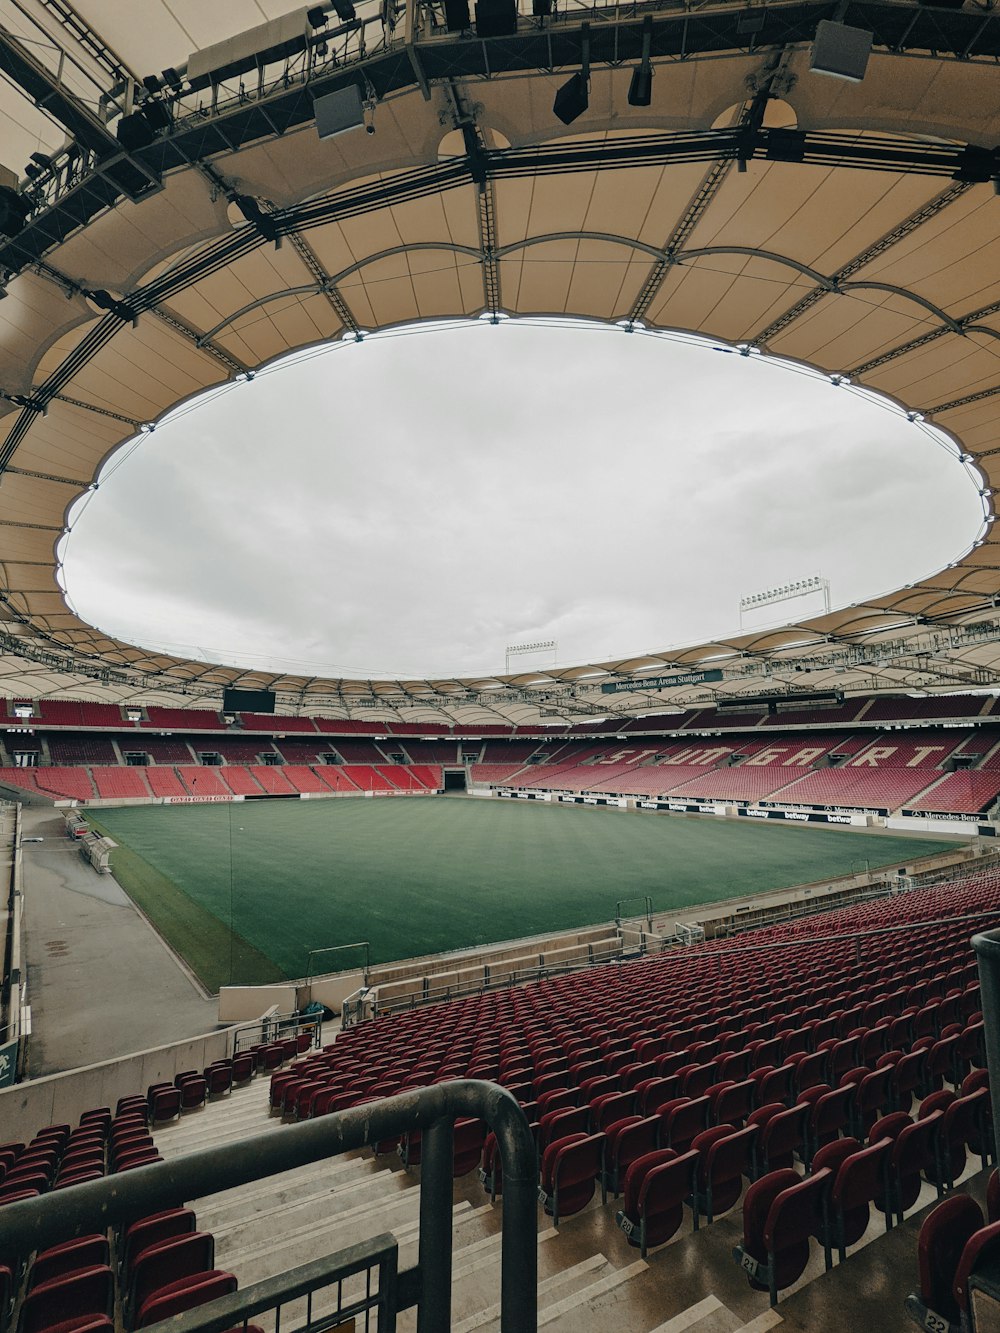 Stadiums in Germany - Mercedes Benz Arena - https://unsplash.com/photos/iarx5wQwhMM